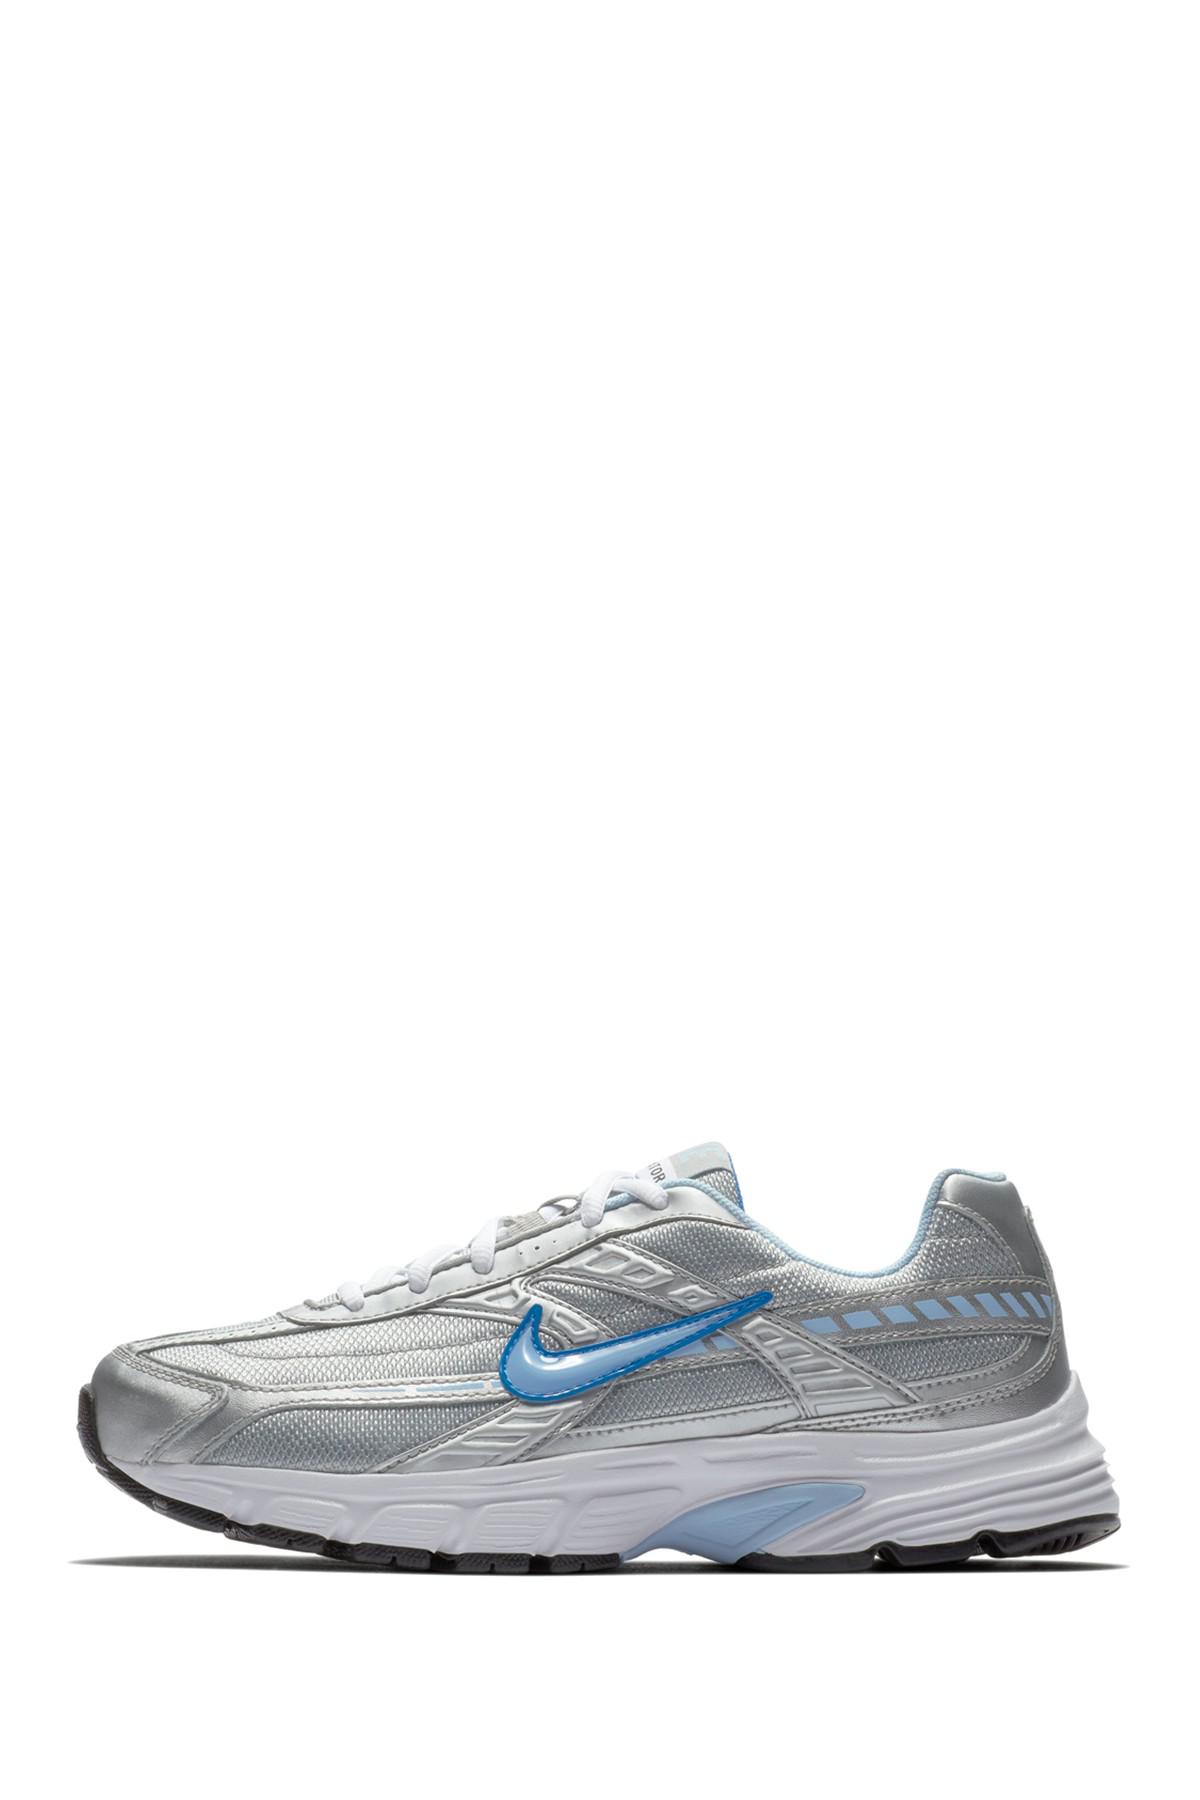 Nike Initiator Running Shoe in Blue for Men - Lyst